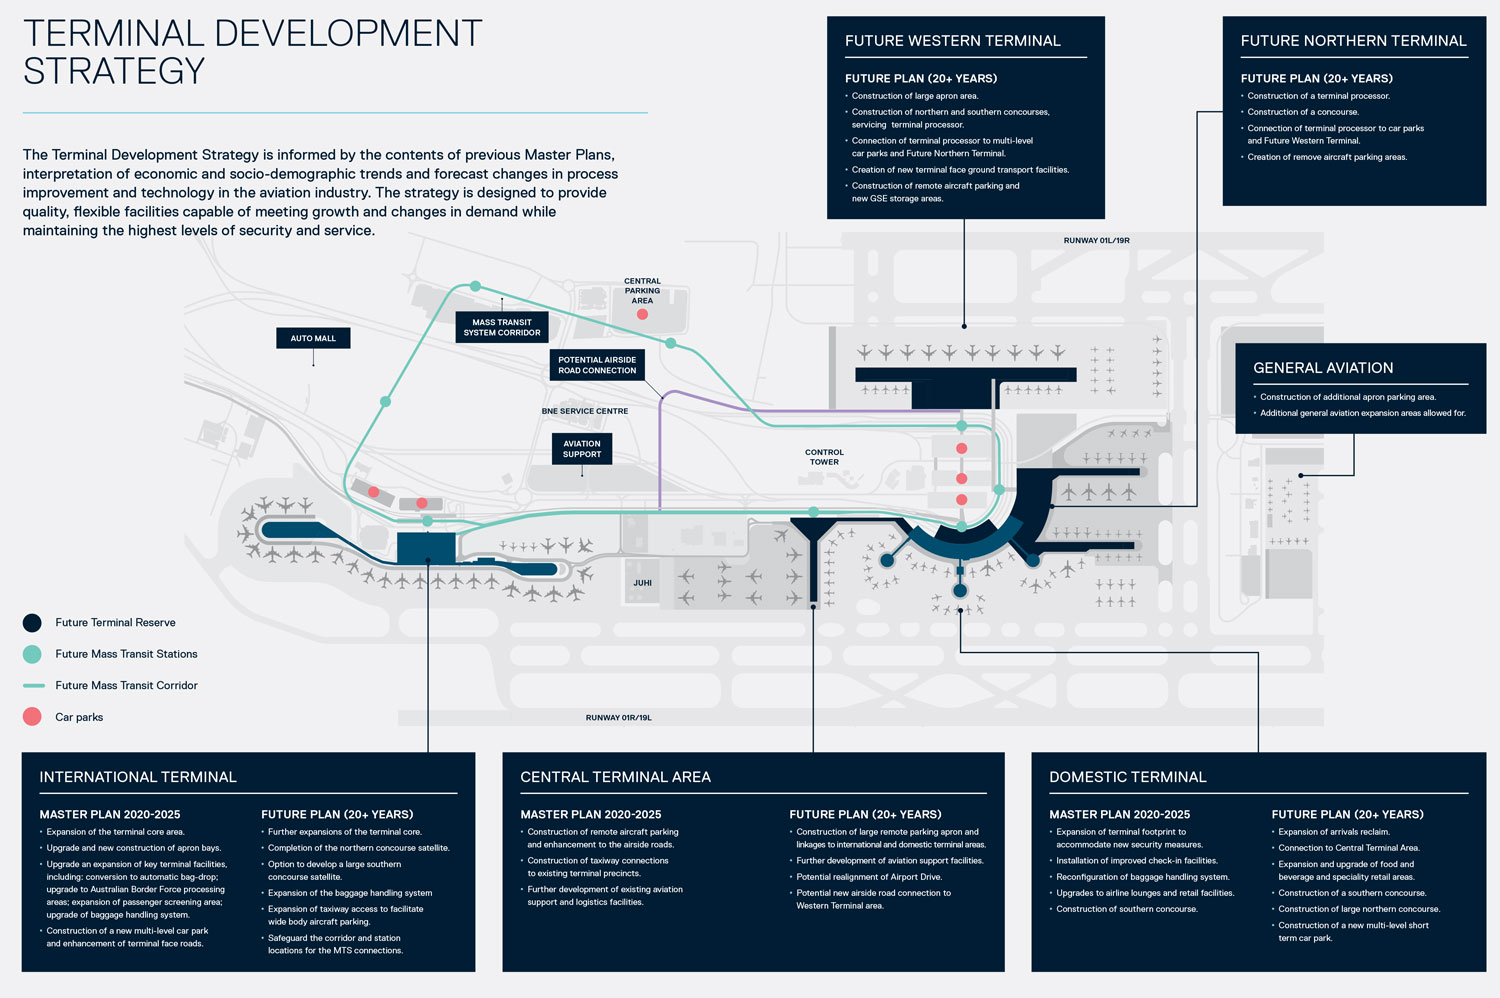 Brisbane Airport Corporation's Terminal Development Strategy